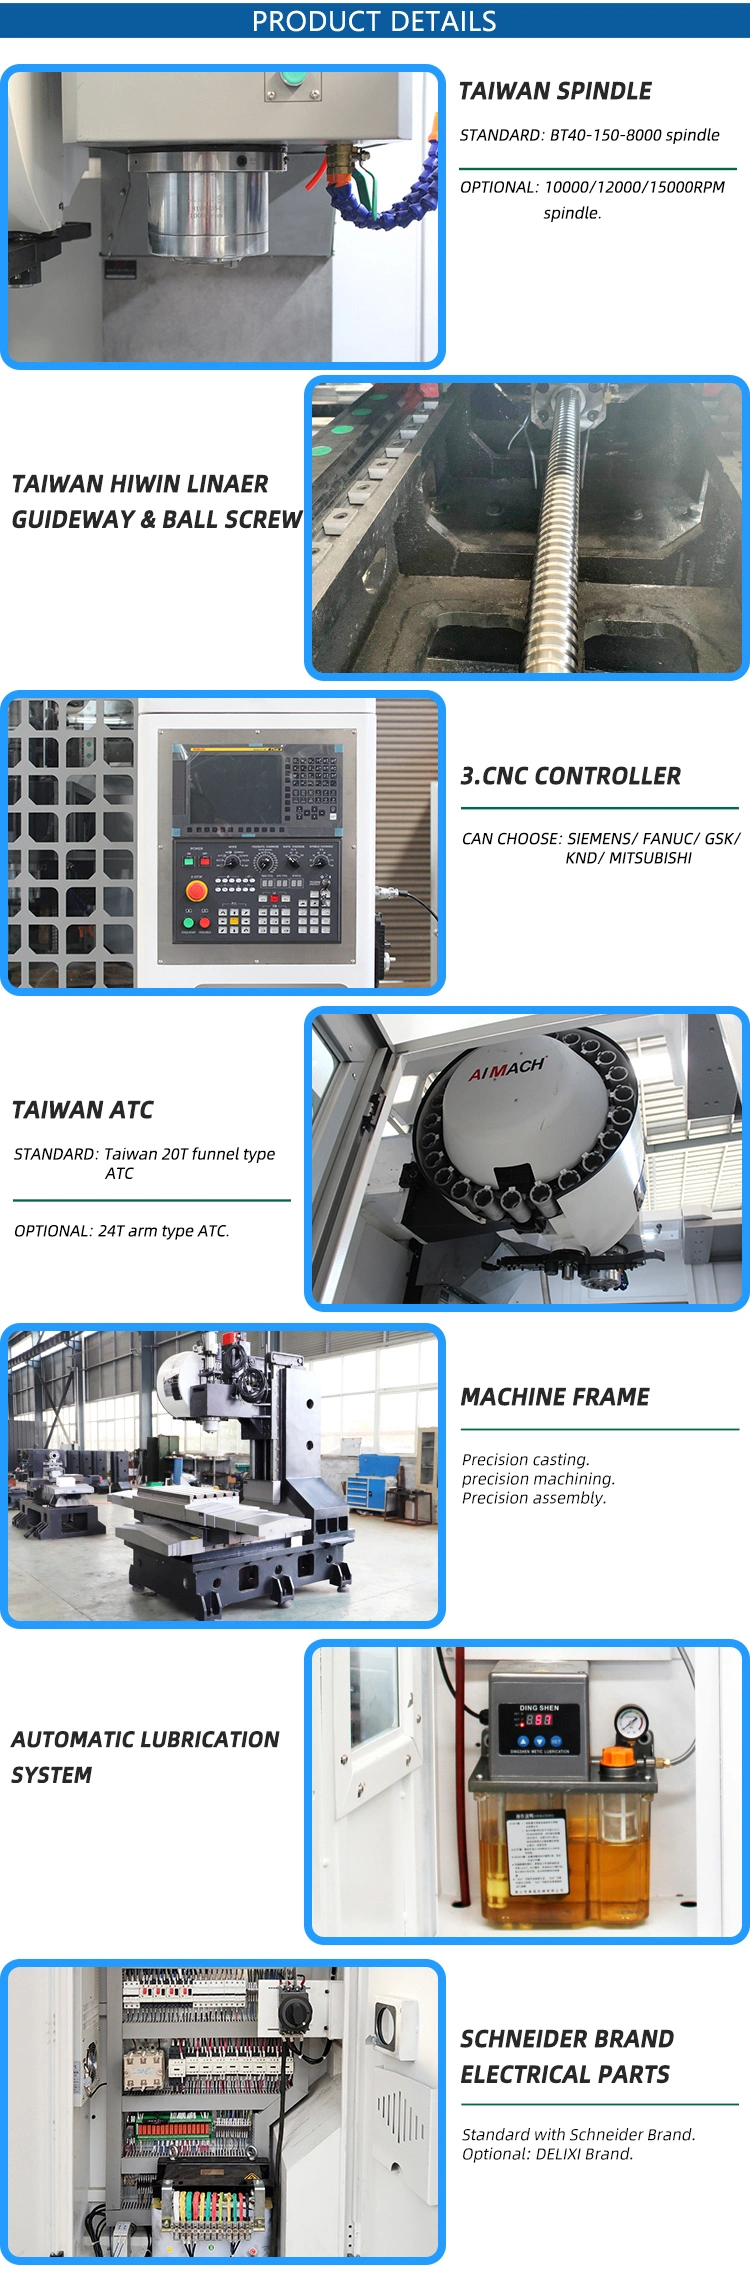 China Manufacturer Vmc Vertical CNC Machining Center CNC Milling Center with 3 Axis 4 Axis 5 Axis